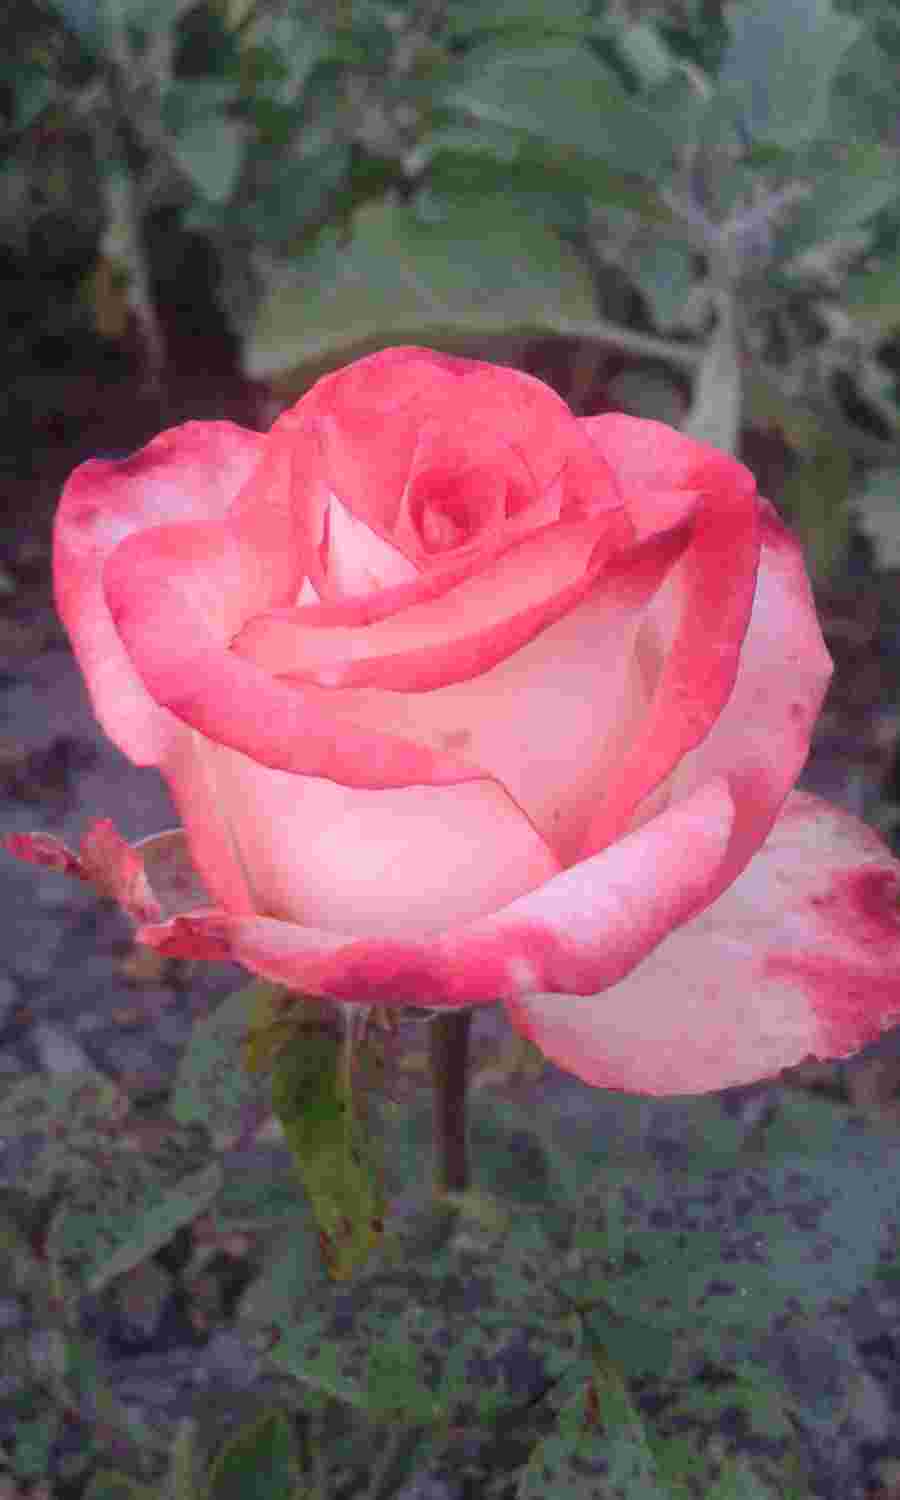 Троянда Блаш